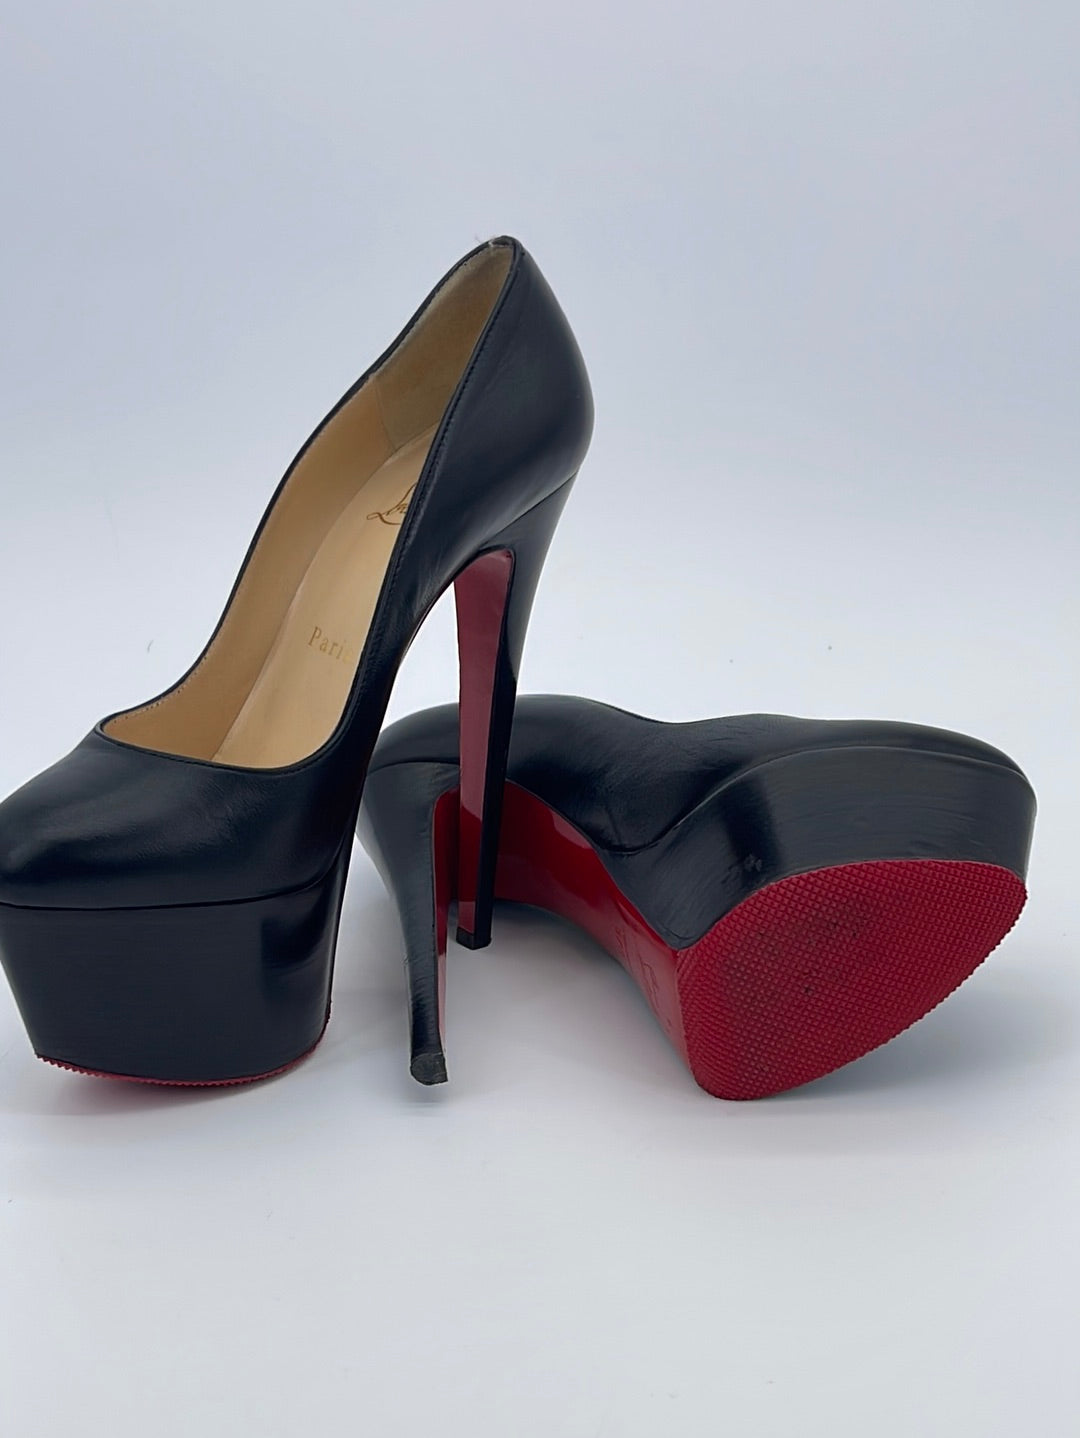 Preloved Christian Louboutin Victoria 160MM Platform Red Sole Black Heels 332 040523.  $300 OFF